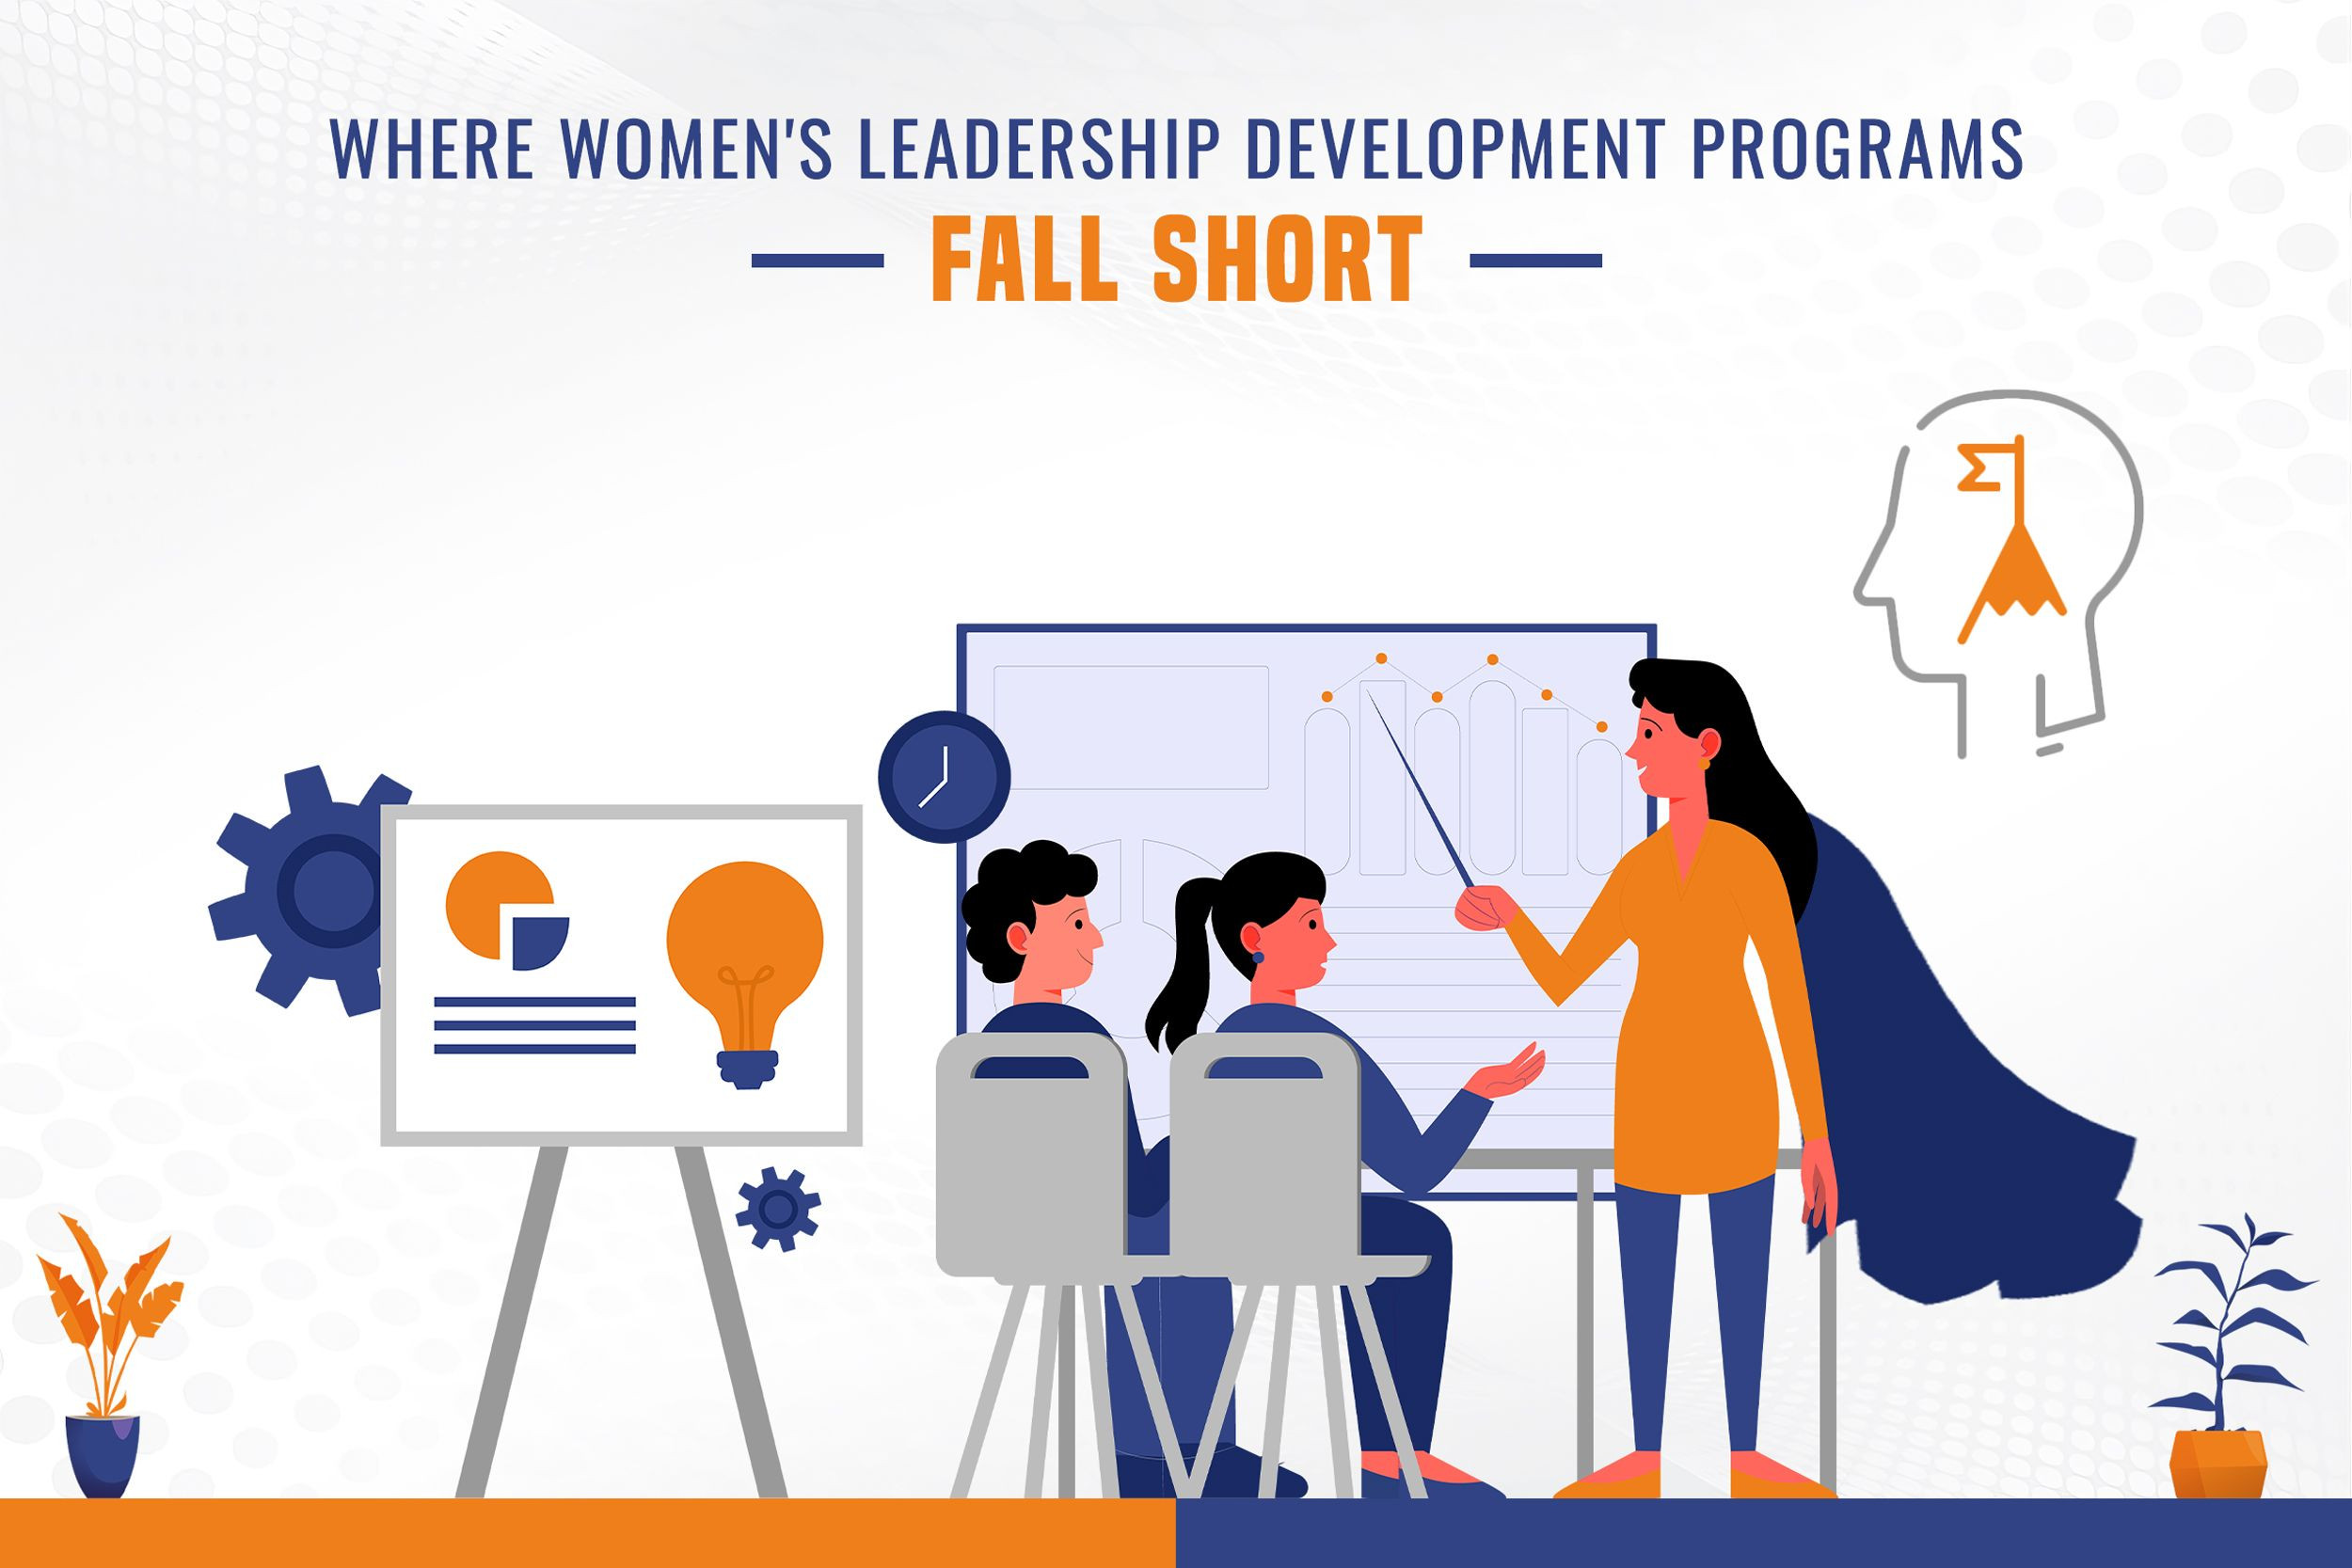 Women's leadership development programs